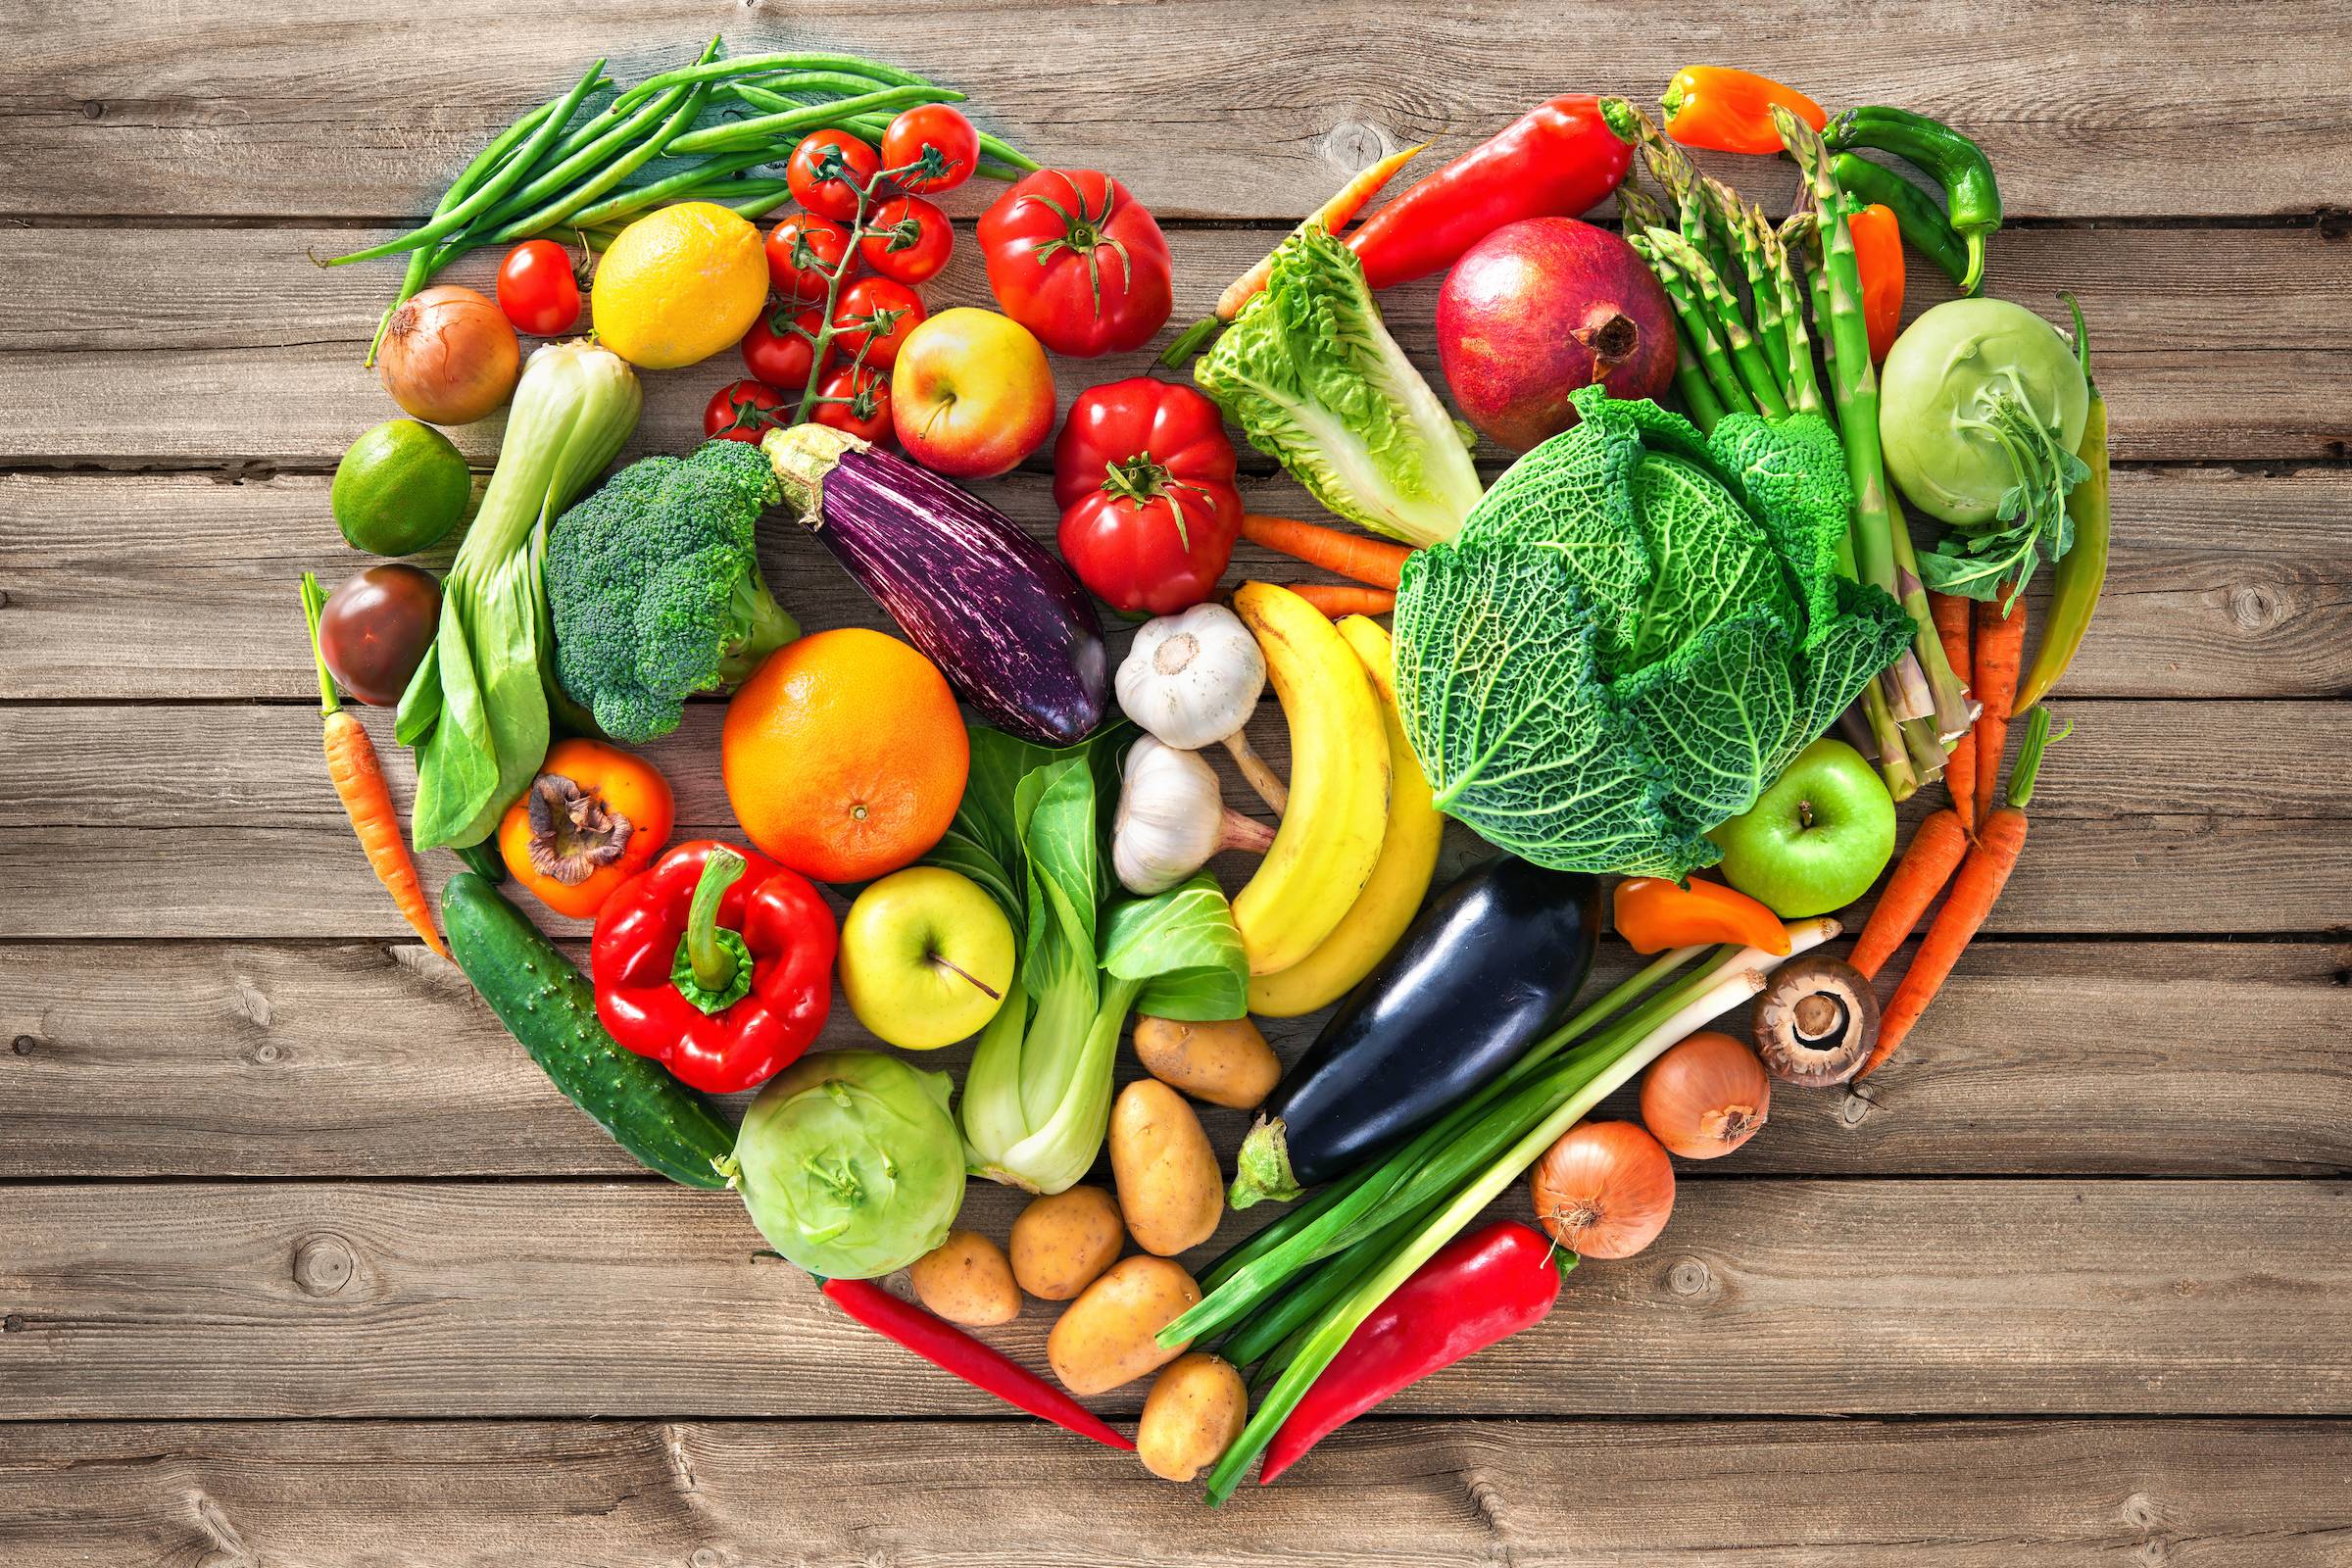 Heart Healthy Food List – The Top 25 Heart Healthy Foods
